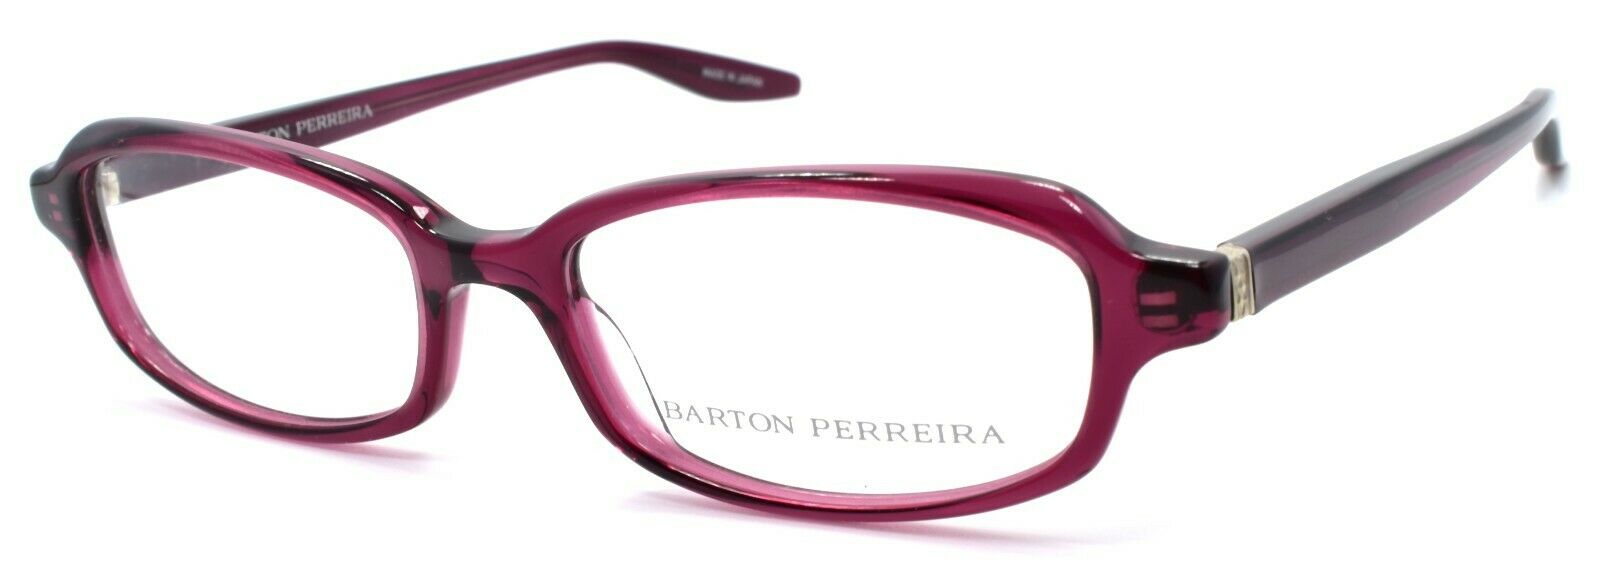 1-Barton Perreira Nicholette PLU/SIL Women's Glasses Frames 49-17-135 Plum Violet-672263038993-IKSpecs